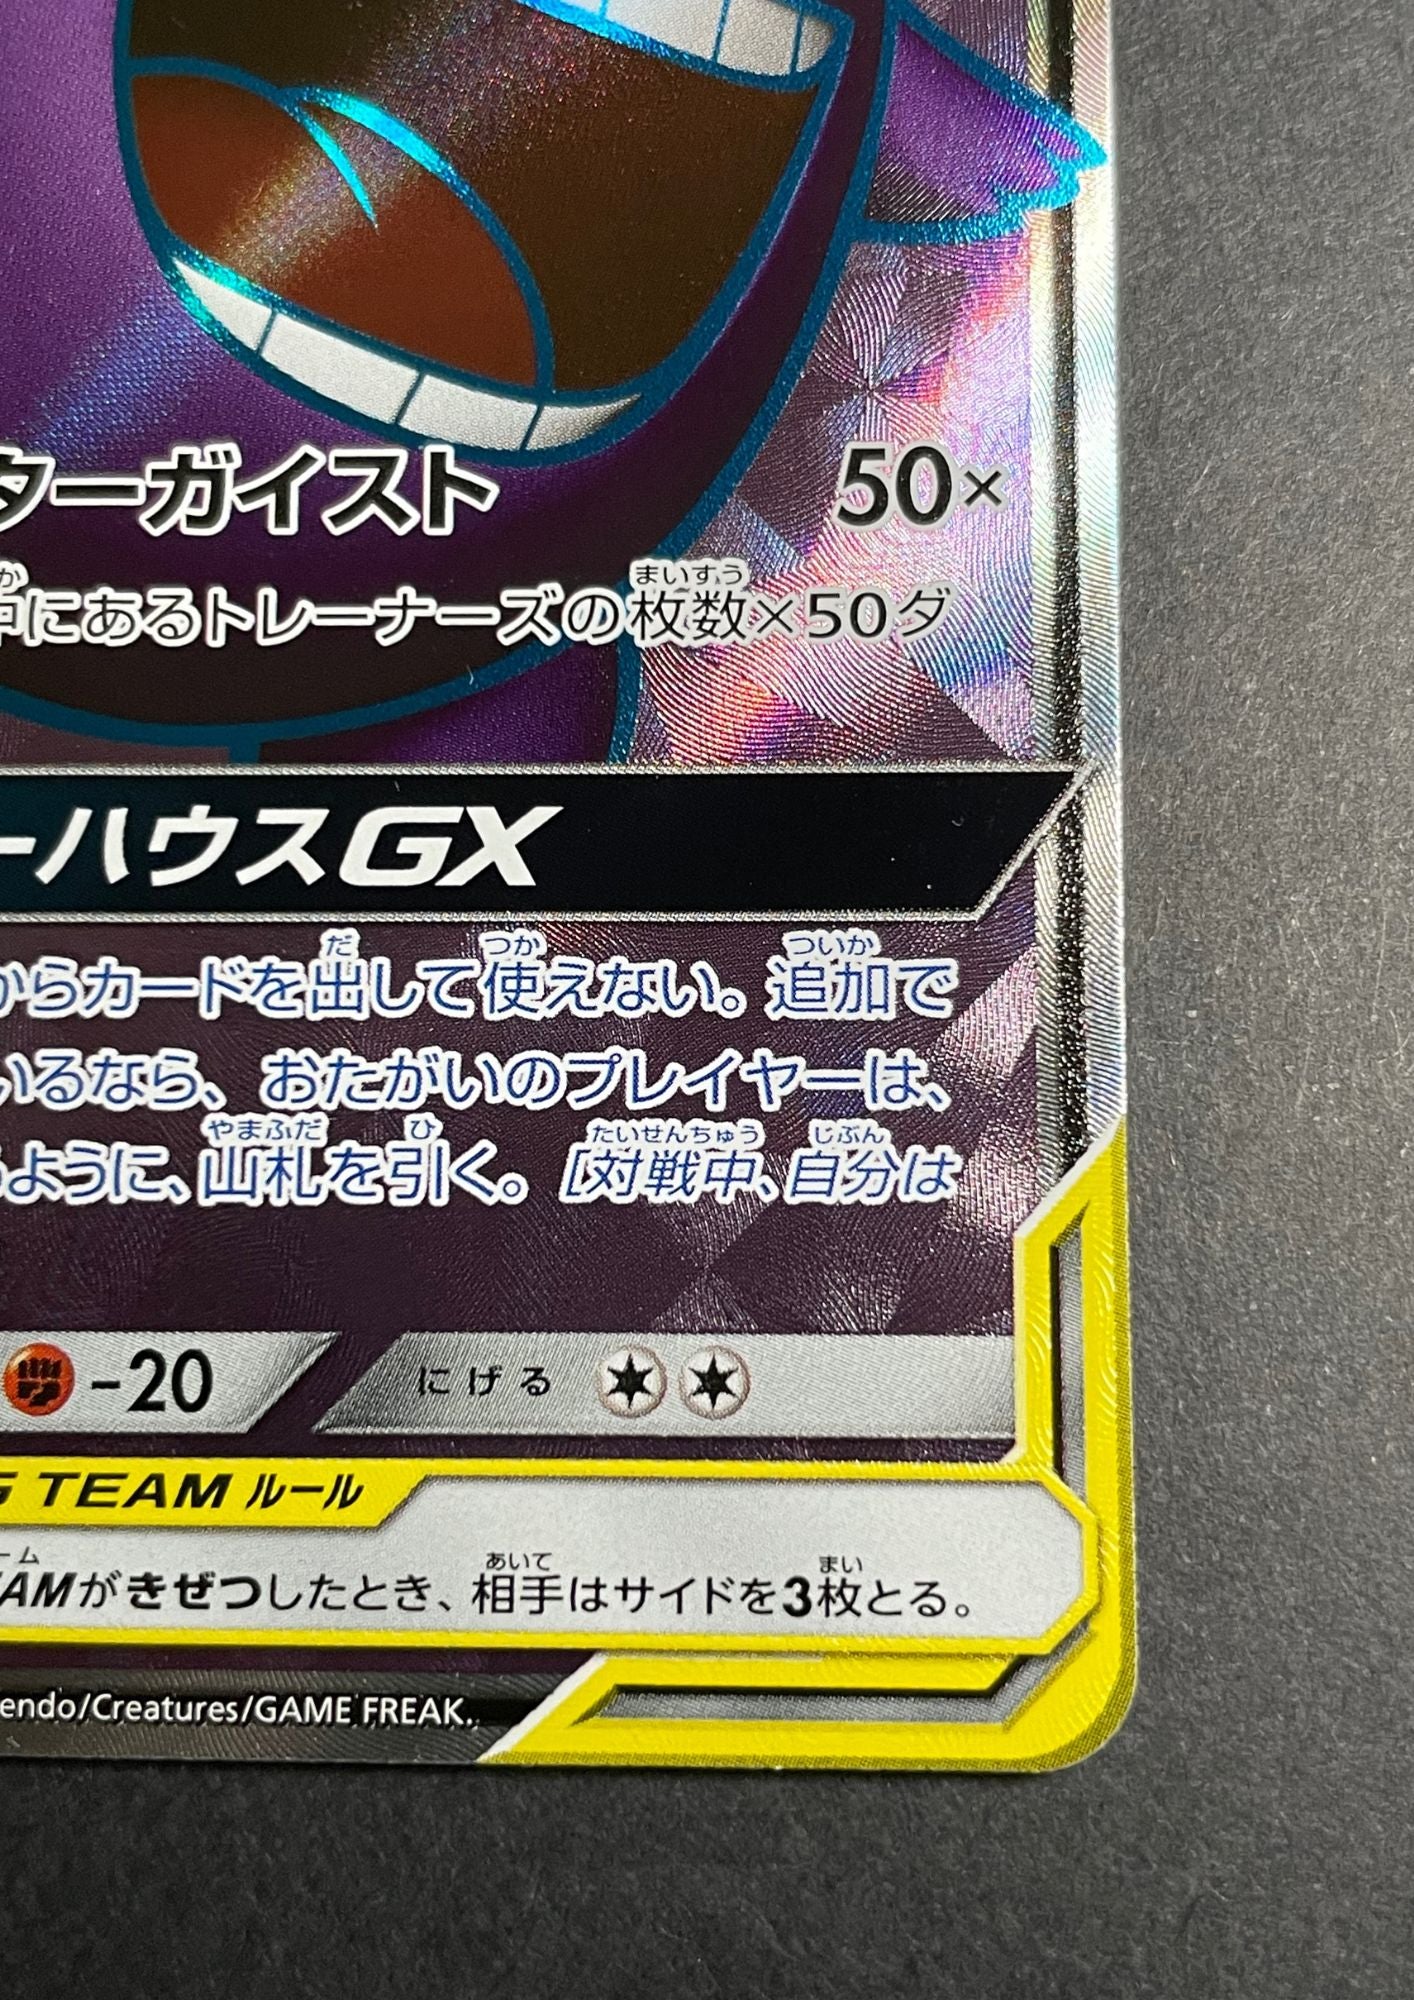 [Pokemon Card Game/[SM8b] GX Ultra Shiny]Mimikyu 095/150 Mirror card